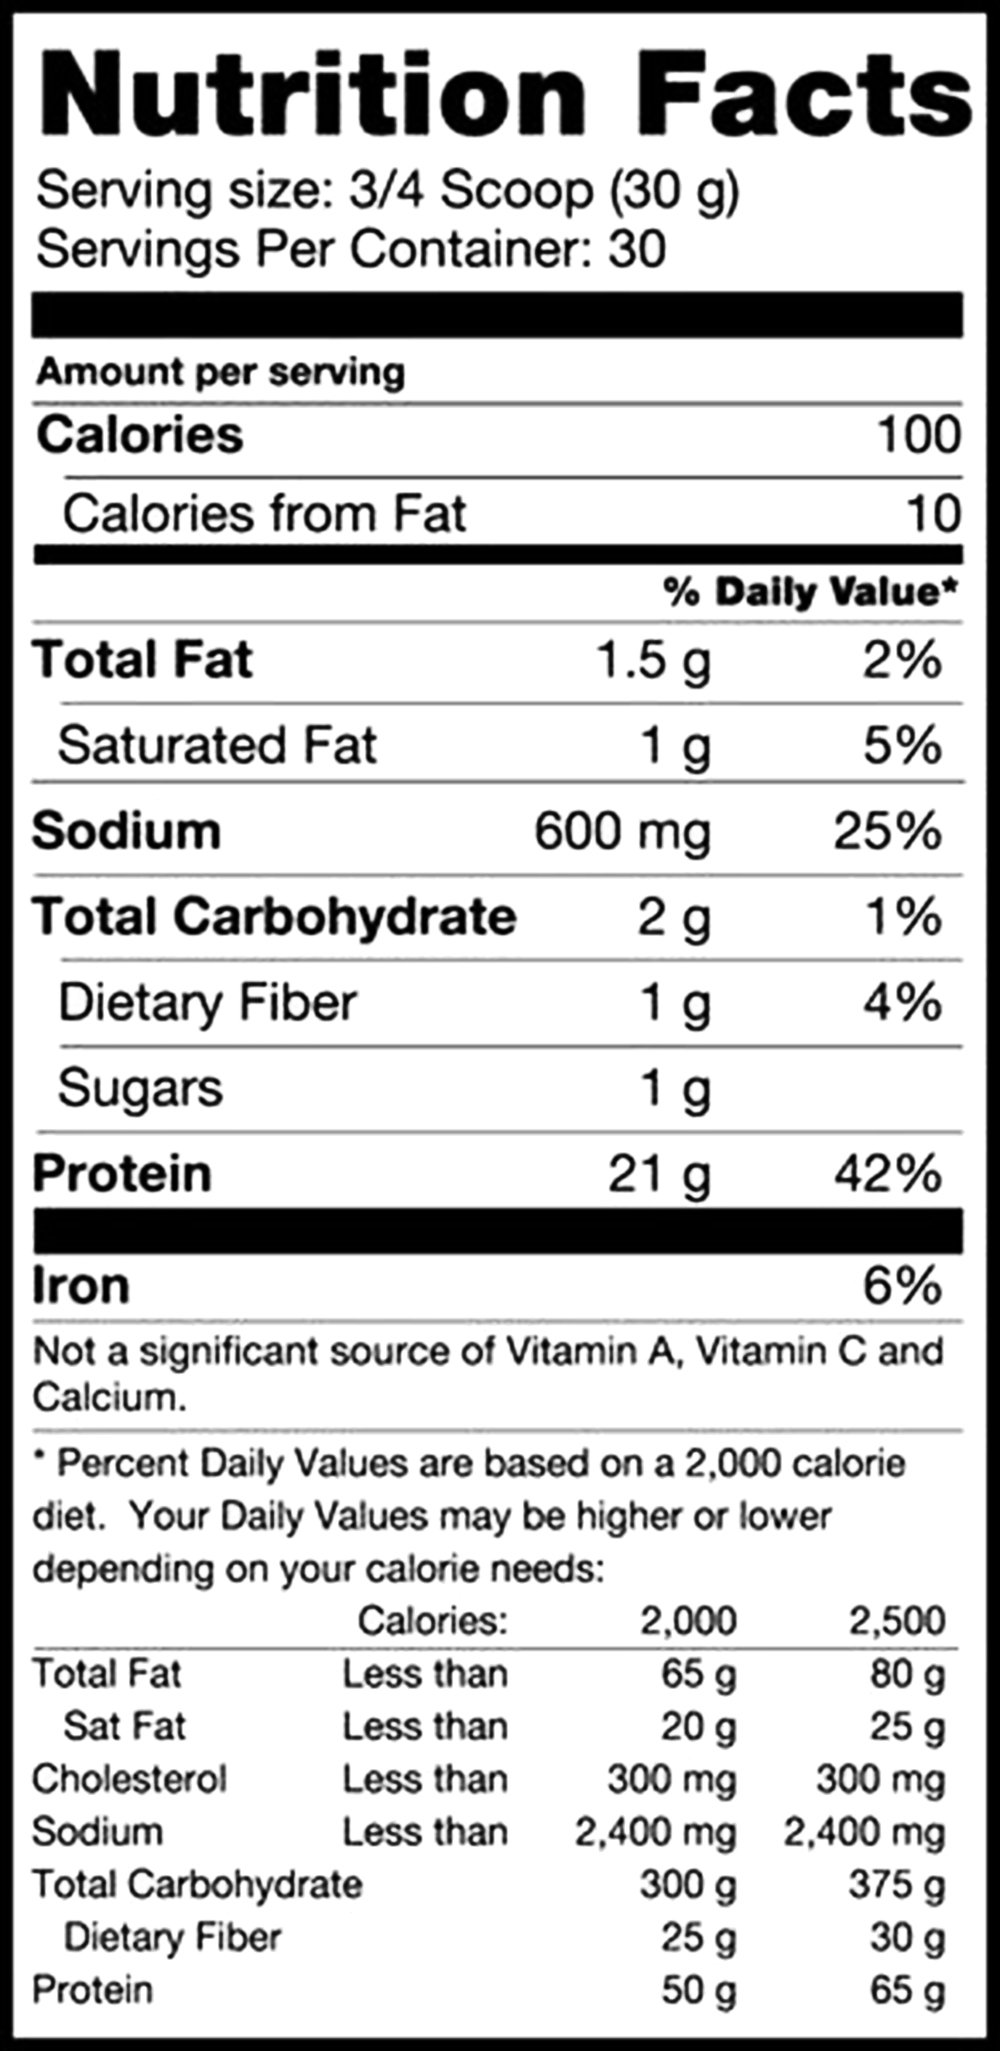 Scitec Nutrition 100% Plant Protein - 1.98 Pound, Chocolate Praline (Vegan, Vegetarian)